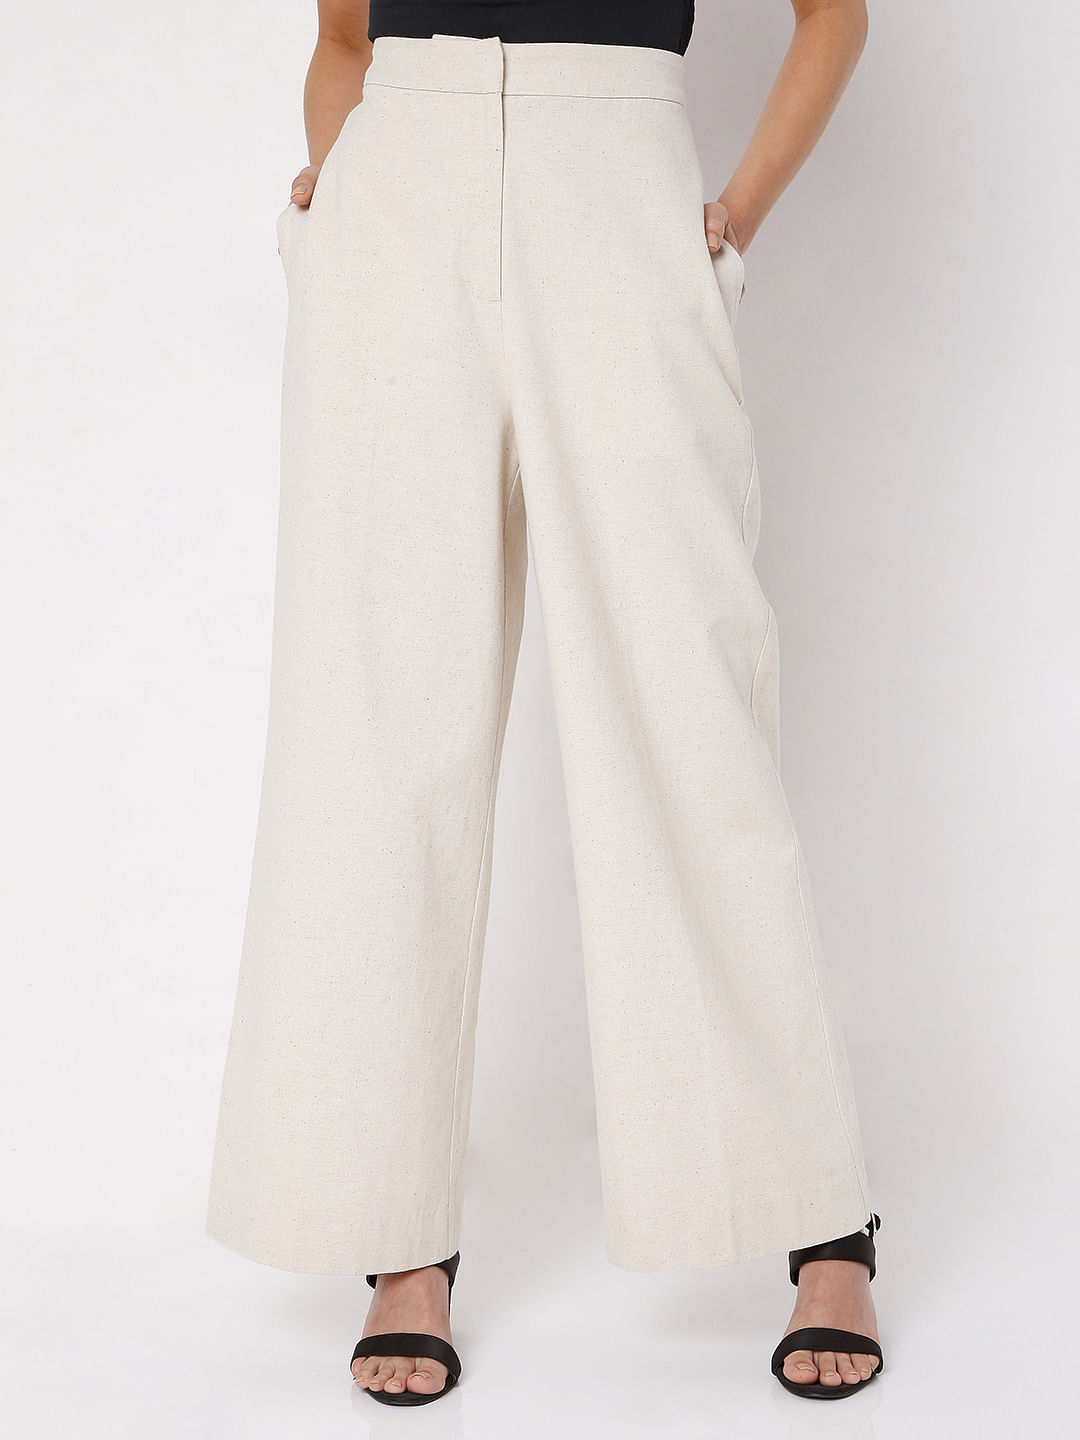 Beige Pants - High Waisted Pants - Paper Bag Trouser Pants - Lulus